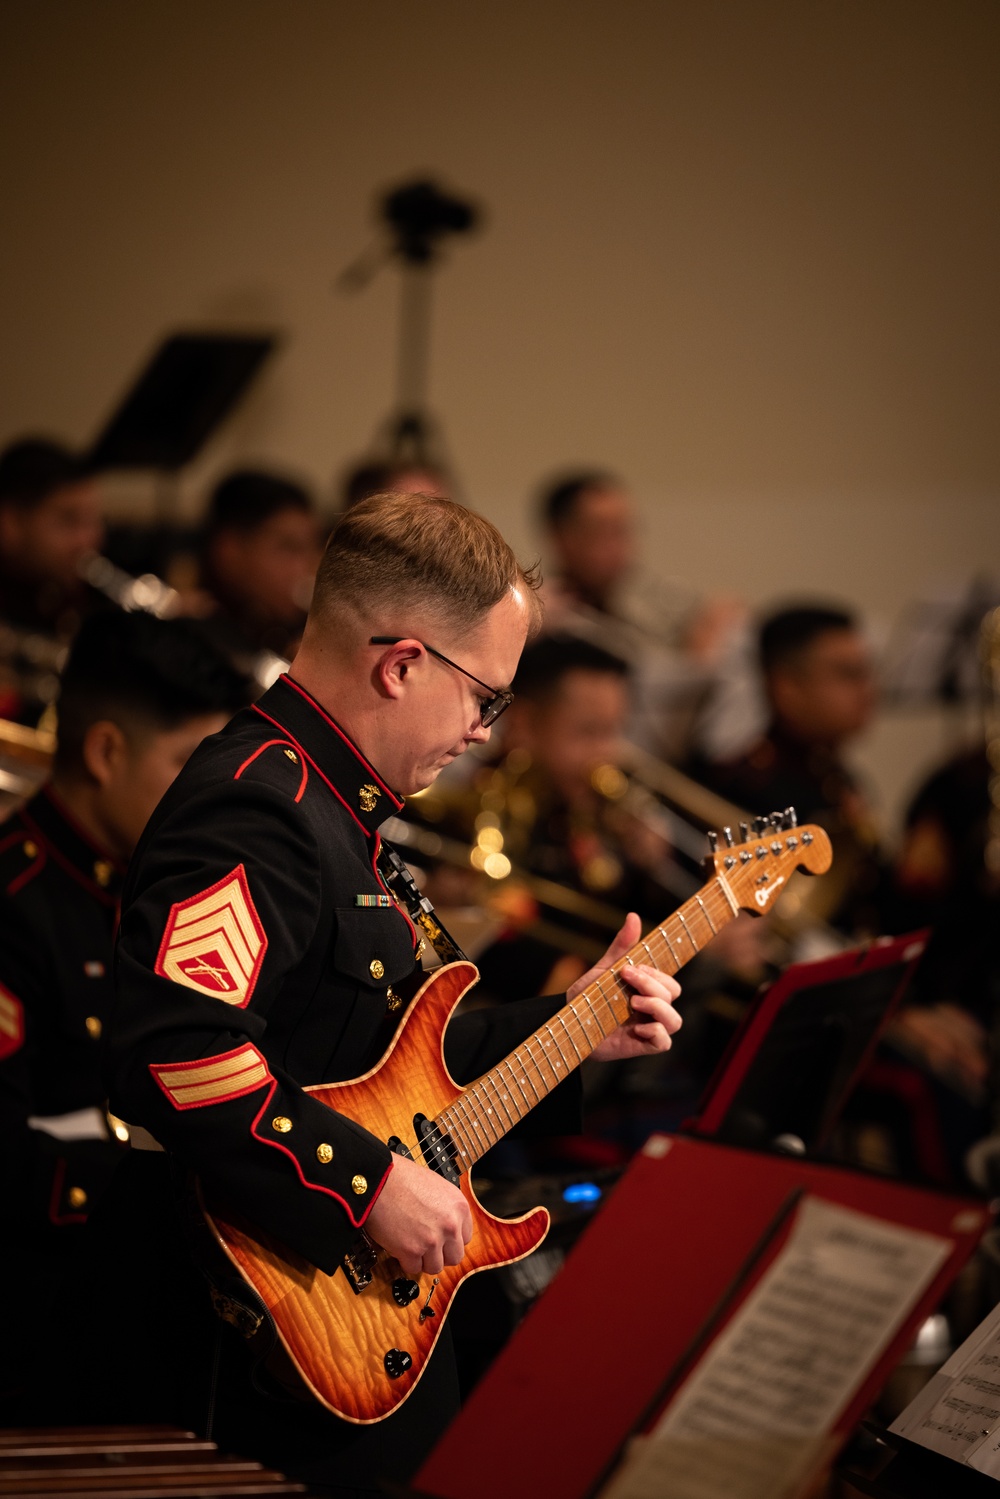 III MEF Band, JGSDF 15th Brigade Band perform 25th ‘Friendship Through Music’ Concert